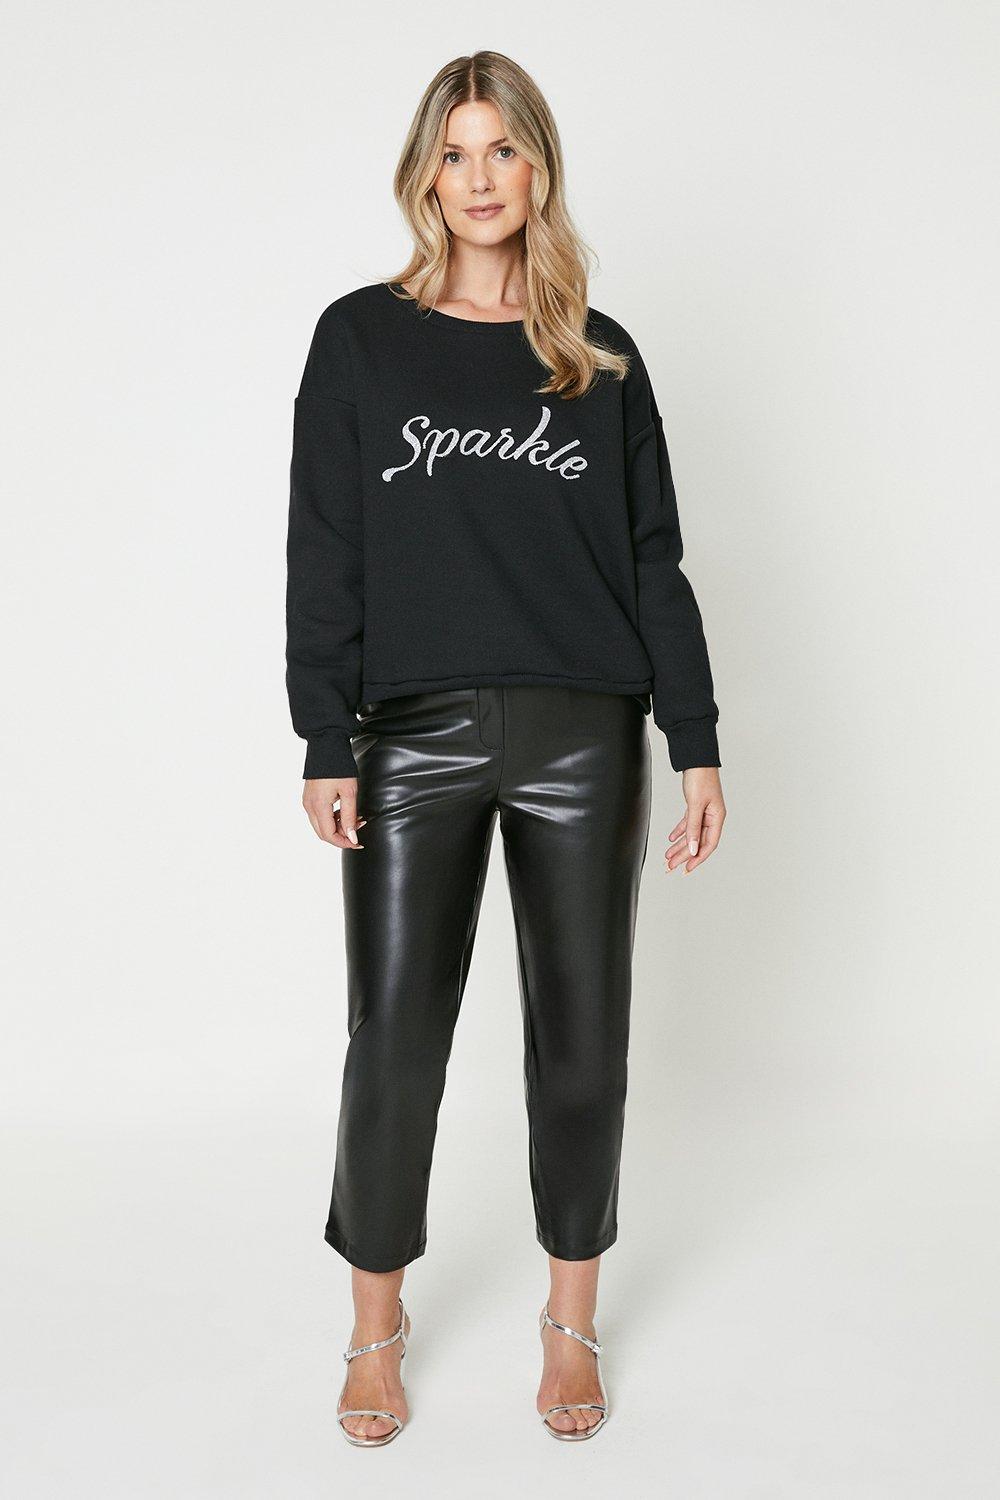 Women’s Sparkle Glitter Puff Sleeve Sweatshirt - black - S